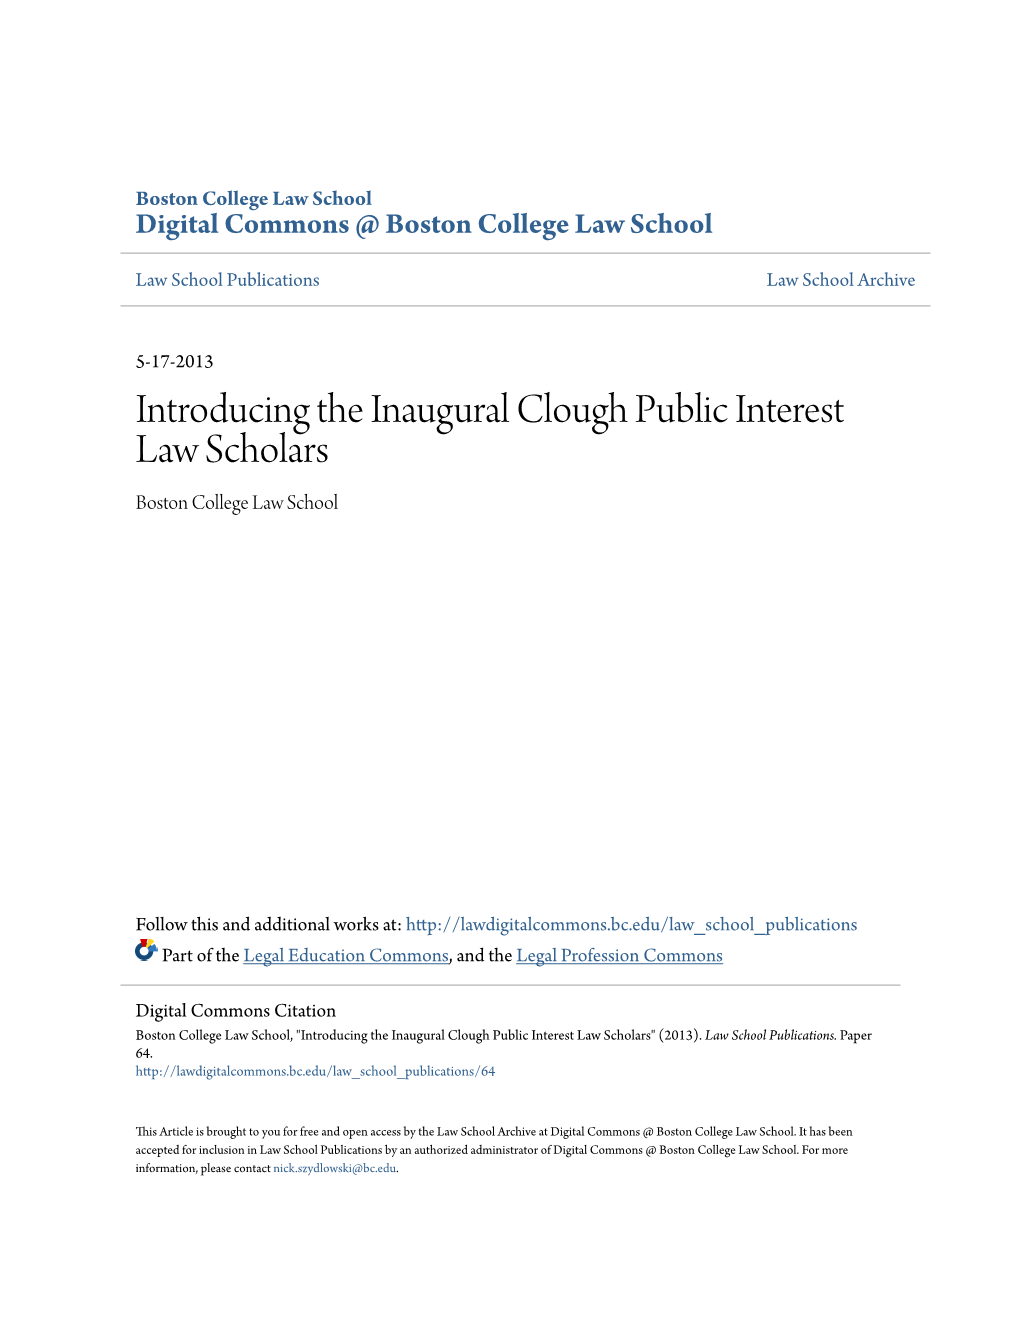 Introducing the Inaugural Clough Public Interest Law Scholars Boston College Law School